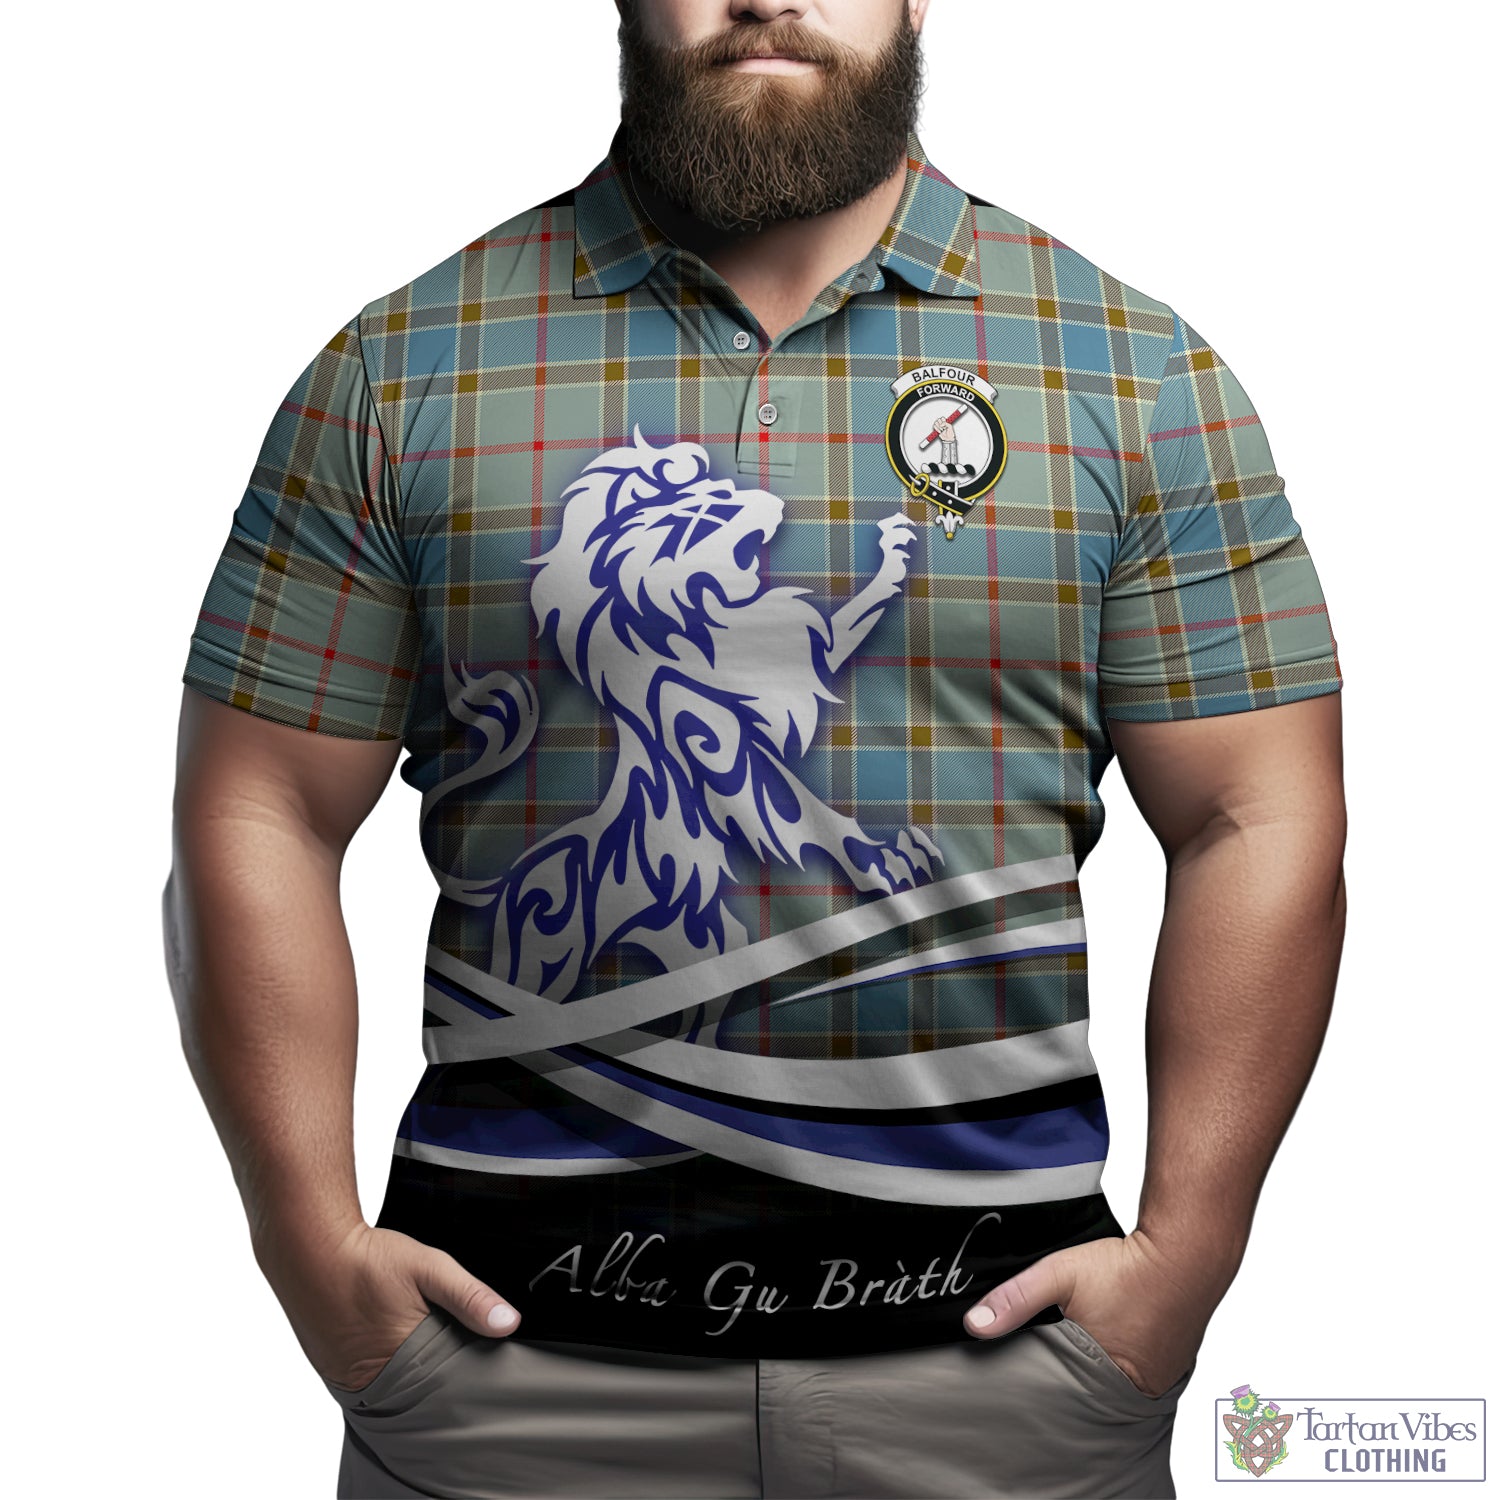 balfour-blue-tartan-polo-shirt-with-alba-gu-brath-regal-lion-emblem